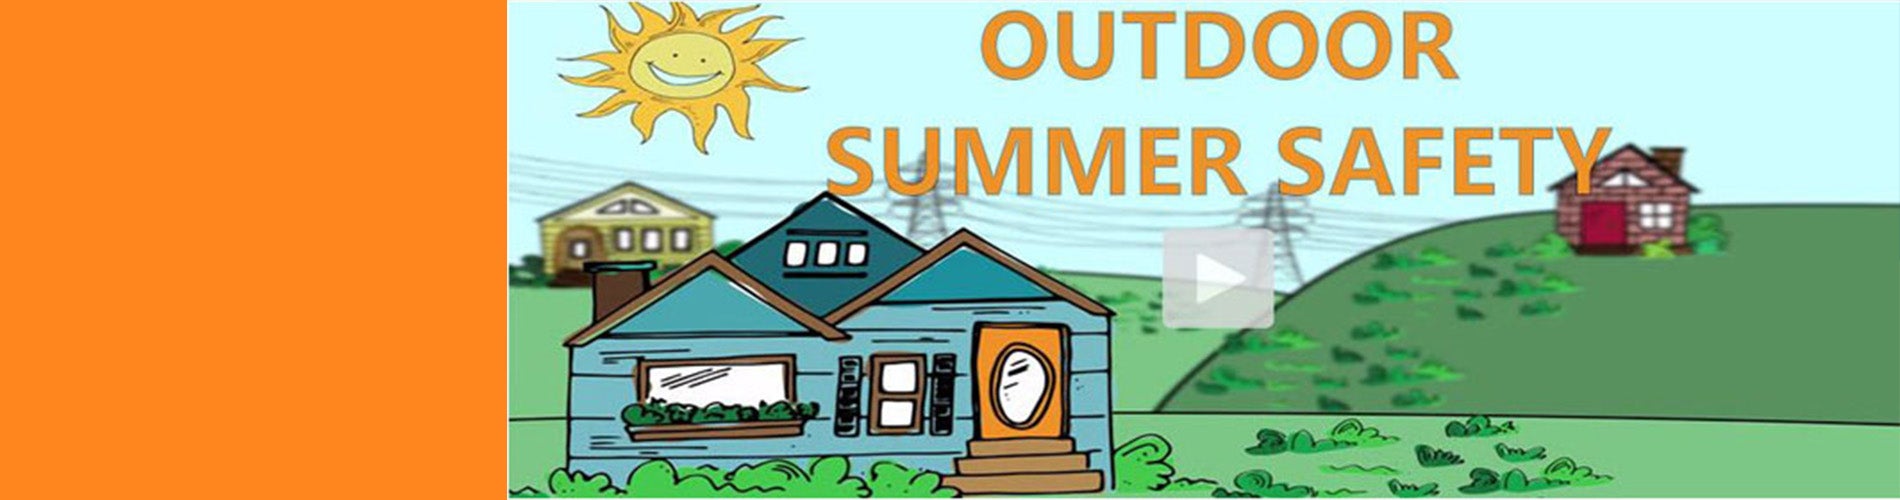 Outdoor Summer Safety